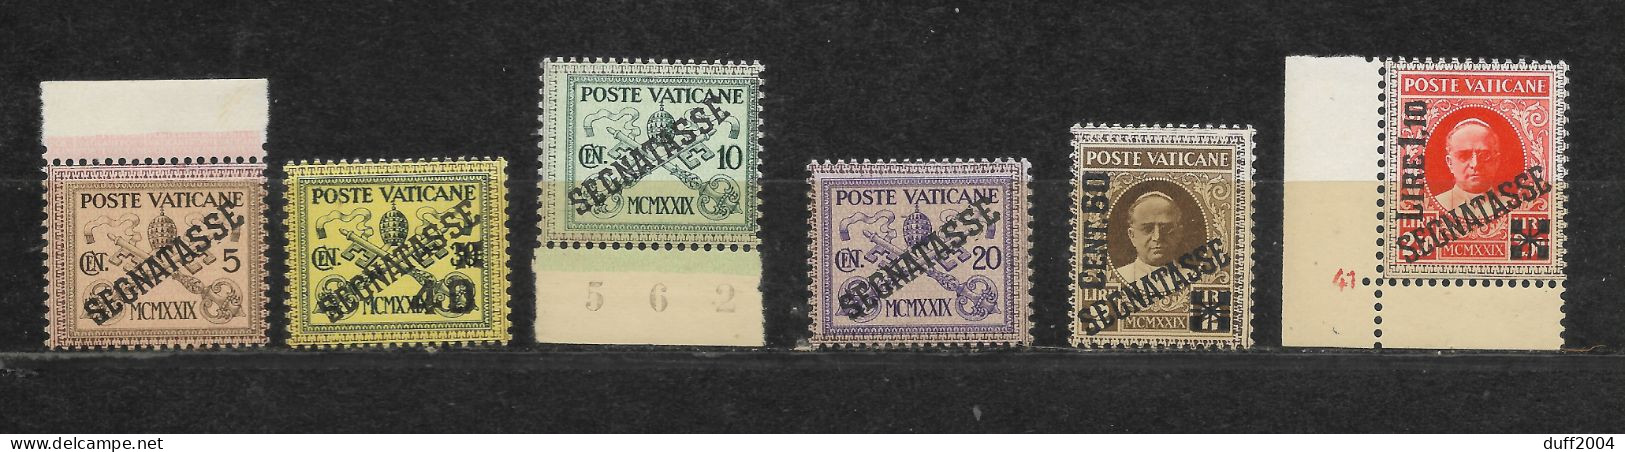 1931 - SERIE SEGNATASSE N. 1 - GOMMA INTEGRALE - FIRMA RAJBAUDI PER ESTESO. - Unused Stamps